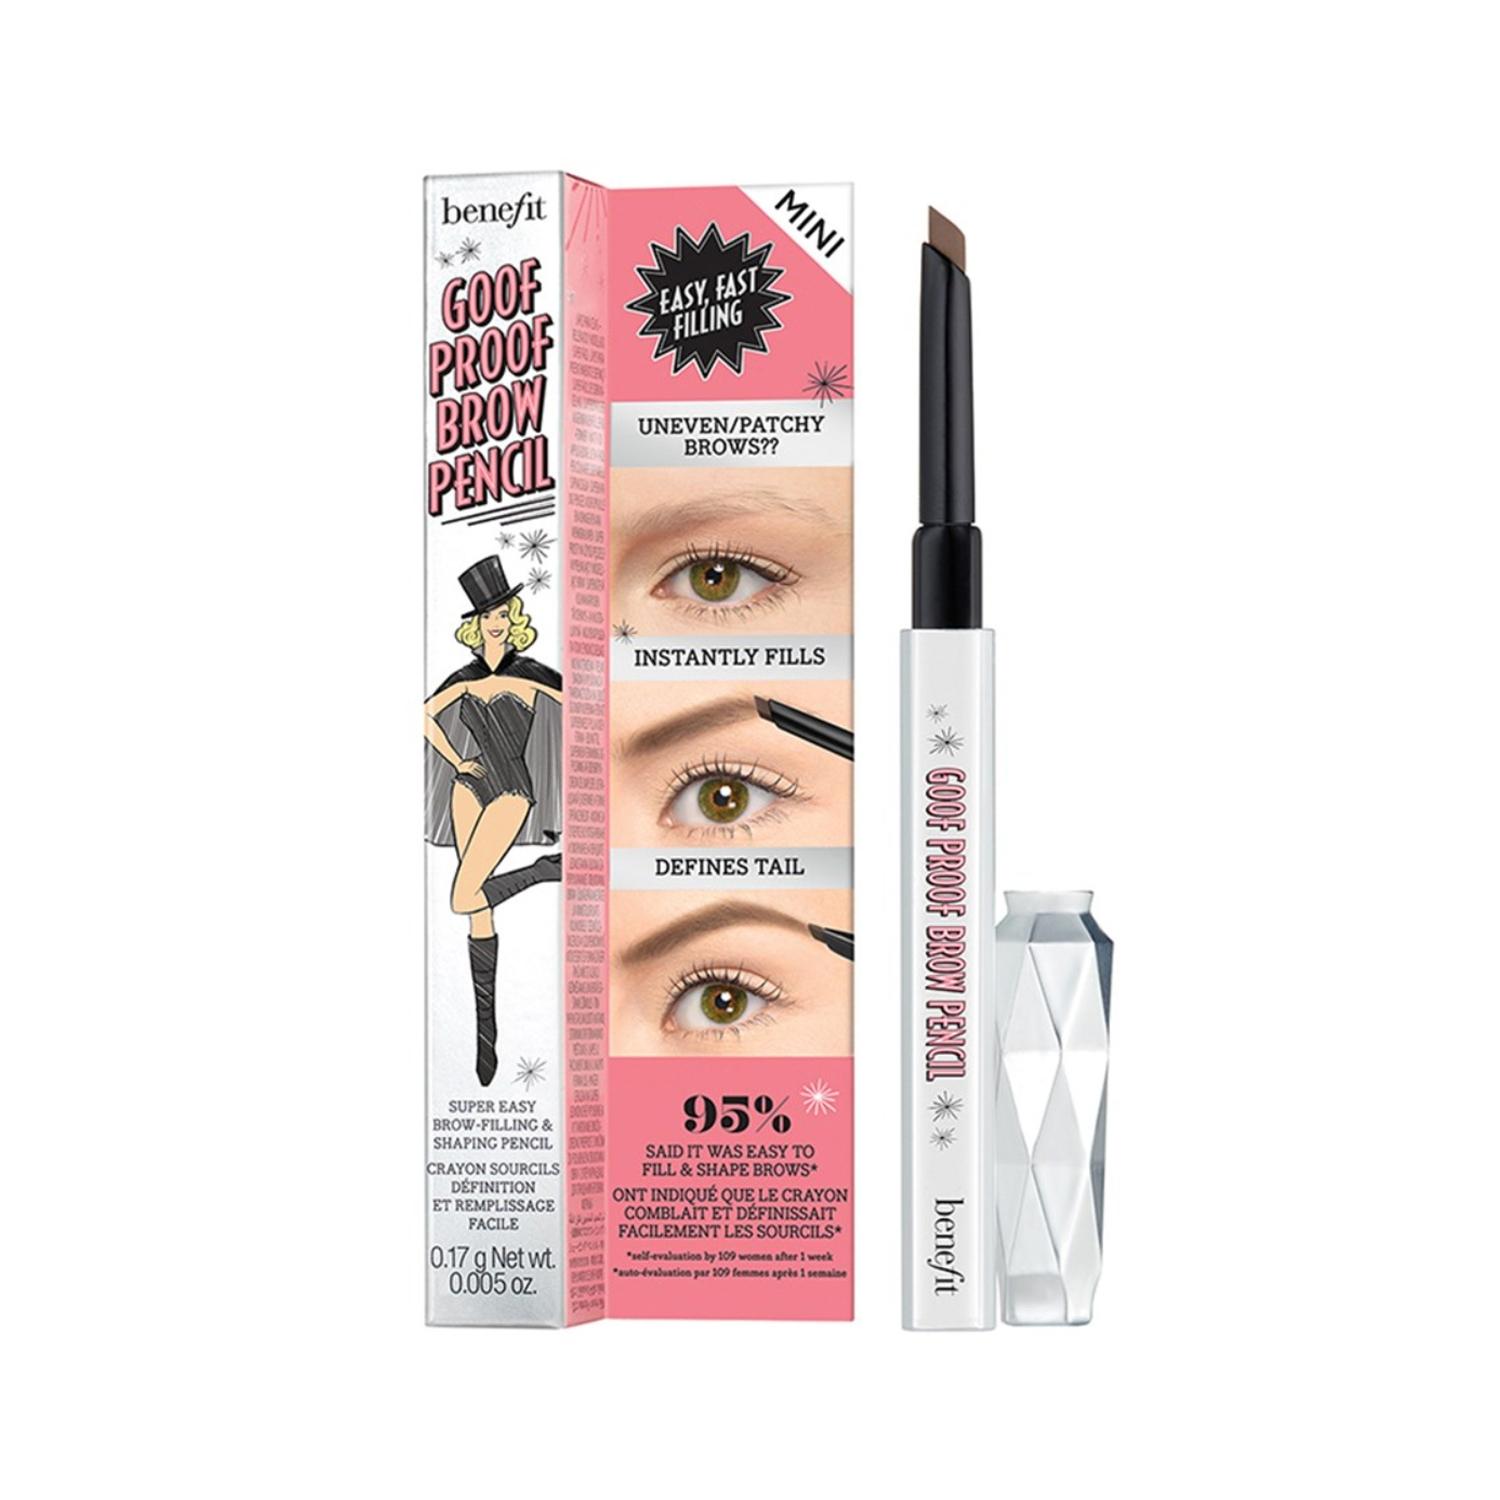 Benefit Cosmetics Goof Proof Eyebrow Pencil Mini - 03 Warm Light Brown (0.17g)